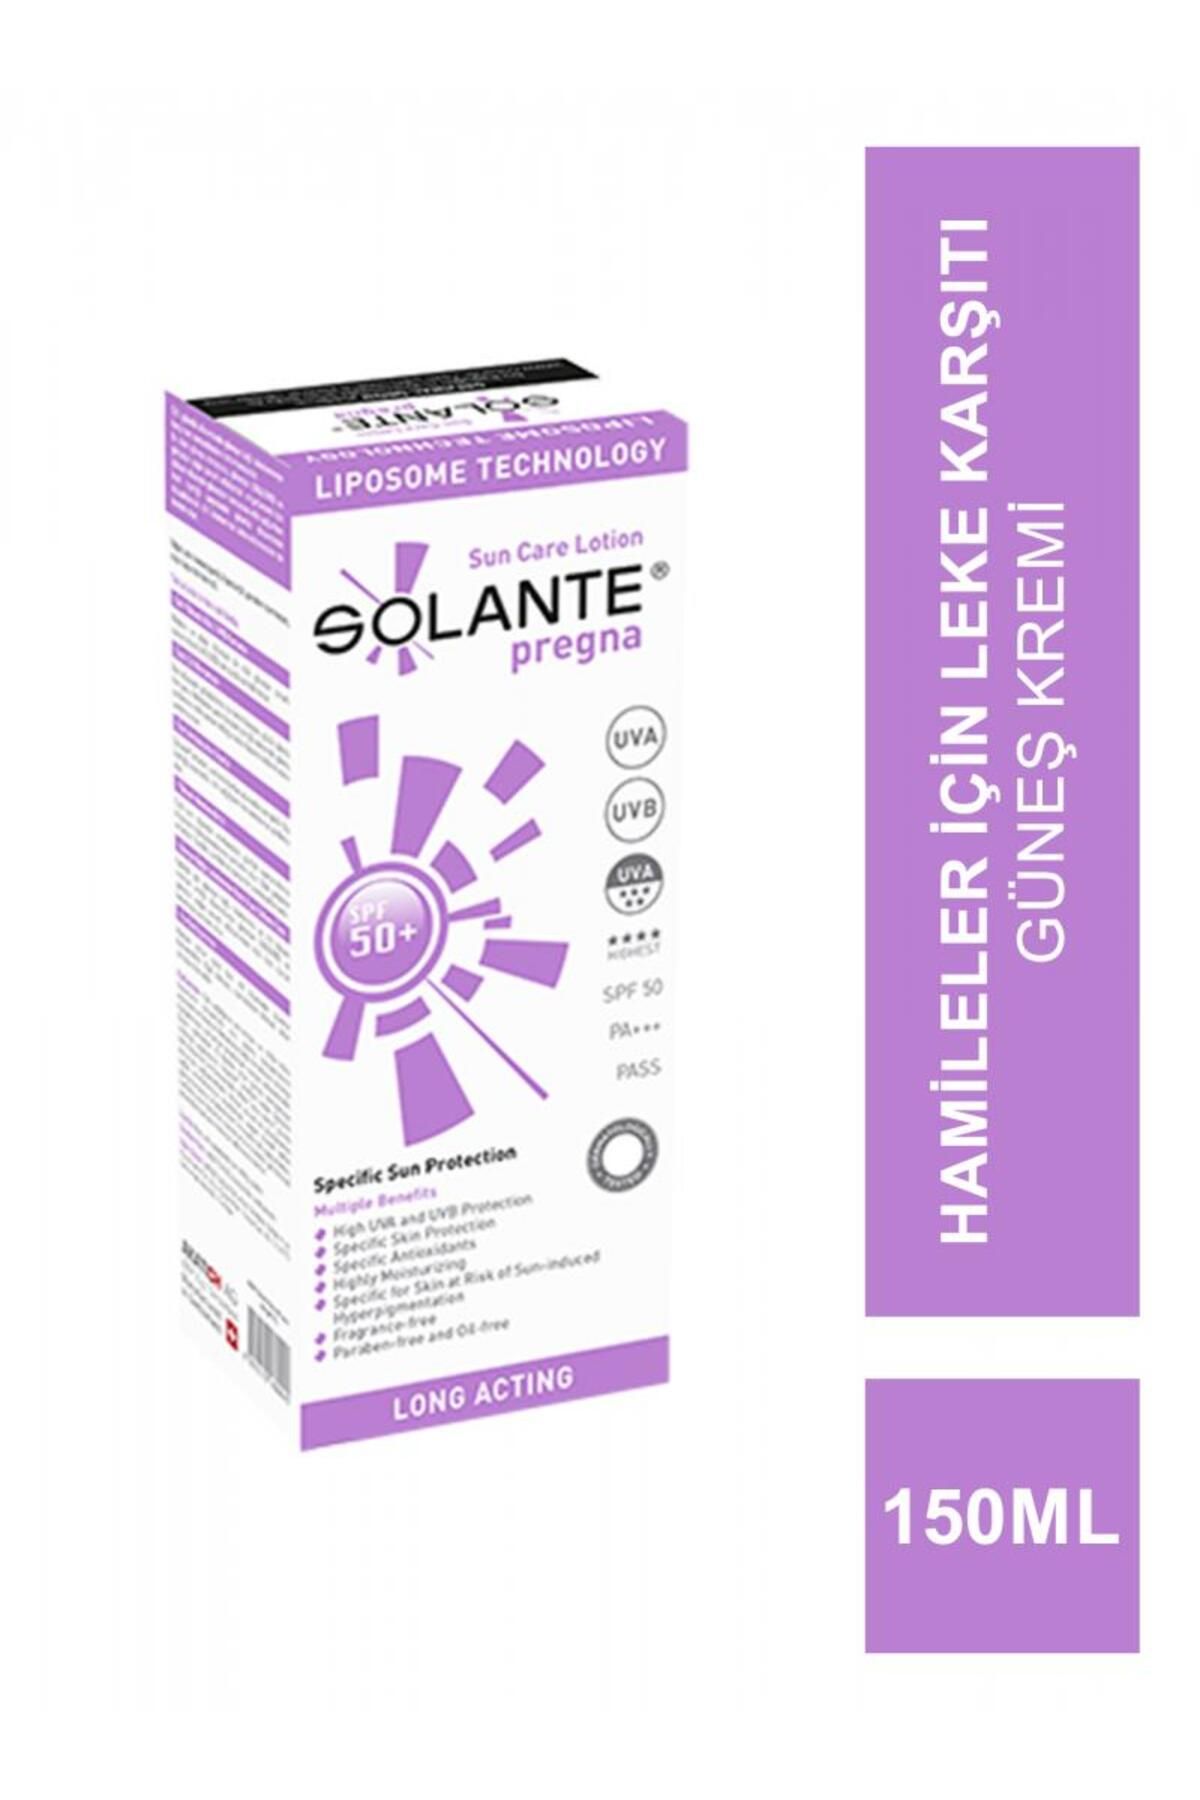 Solante Pregna Hamilelere Özel Güneş Losyonu Spf50 150 ml